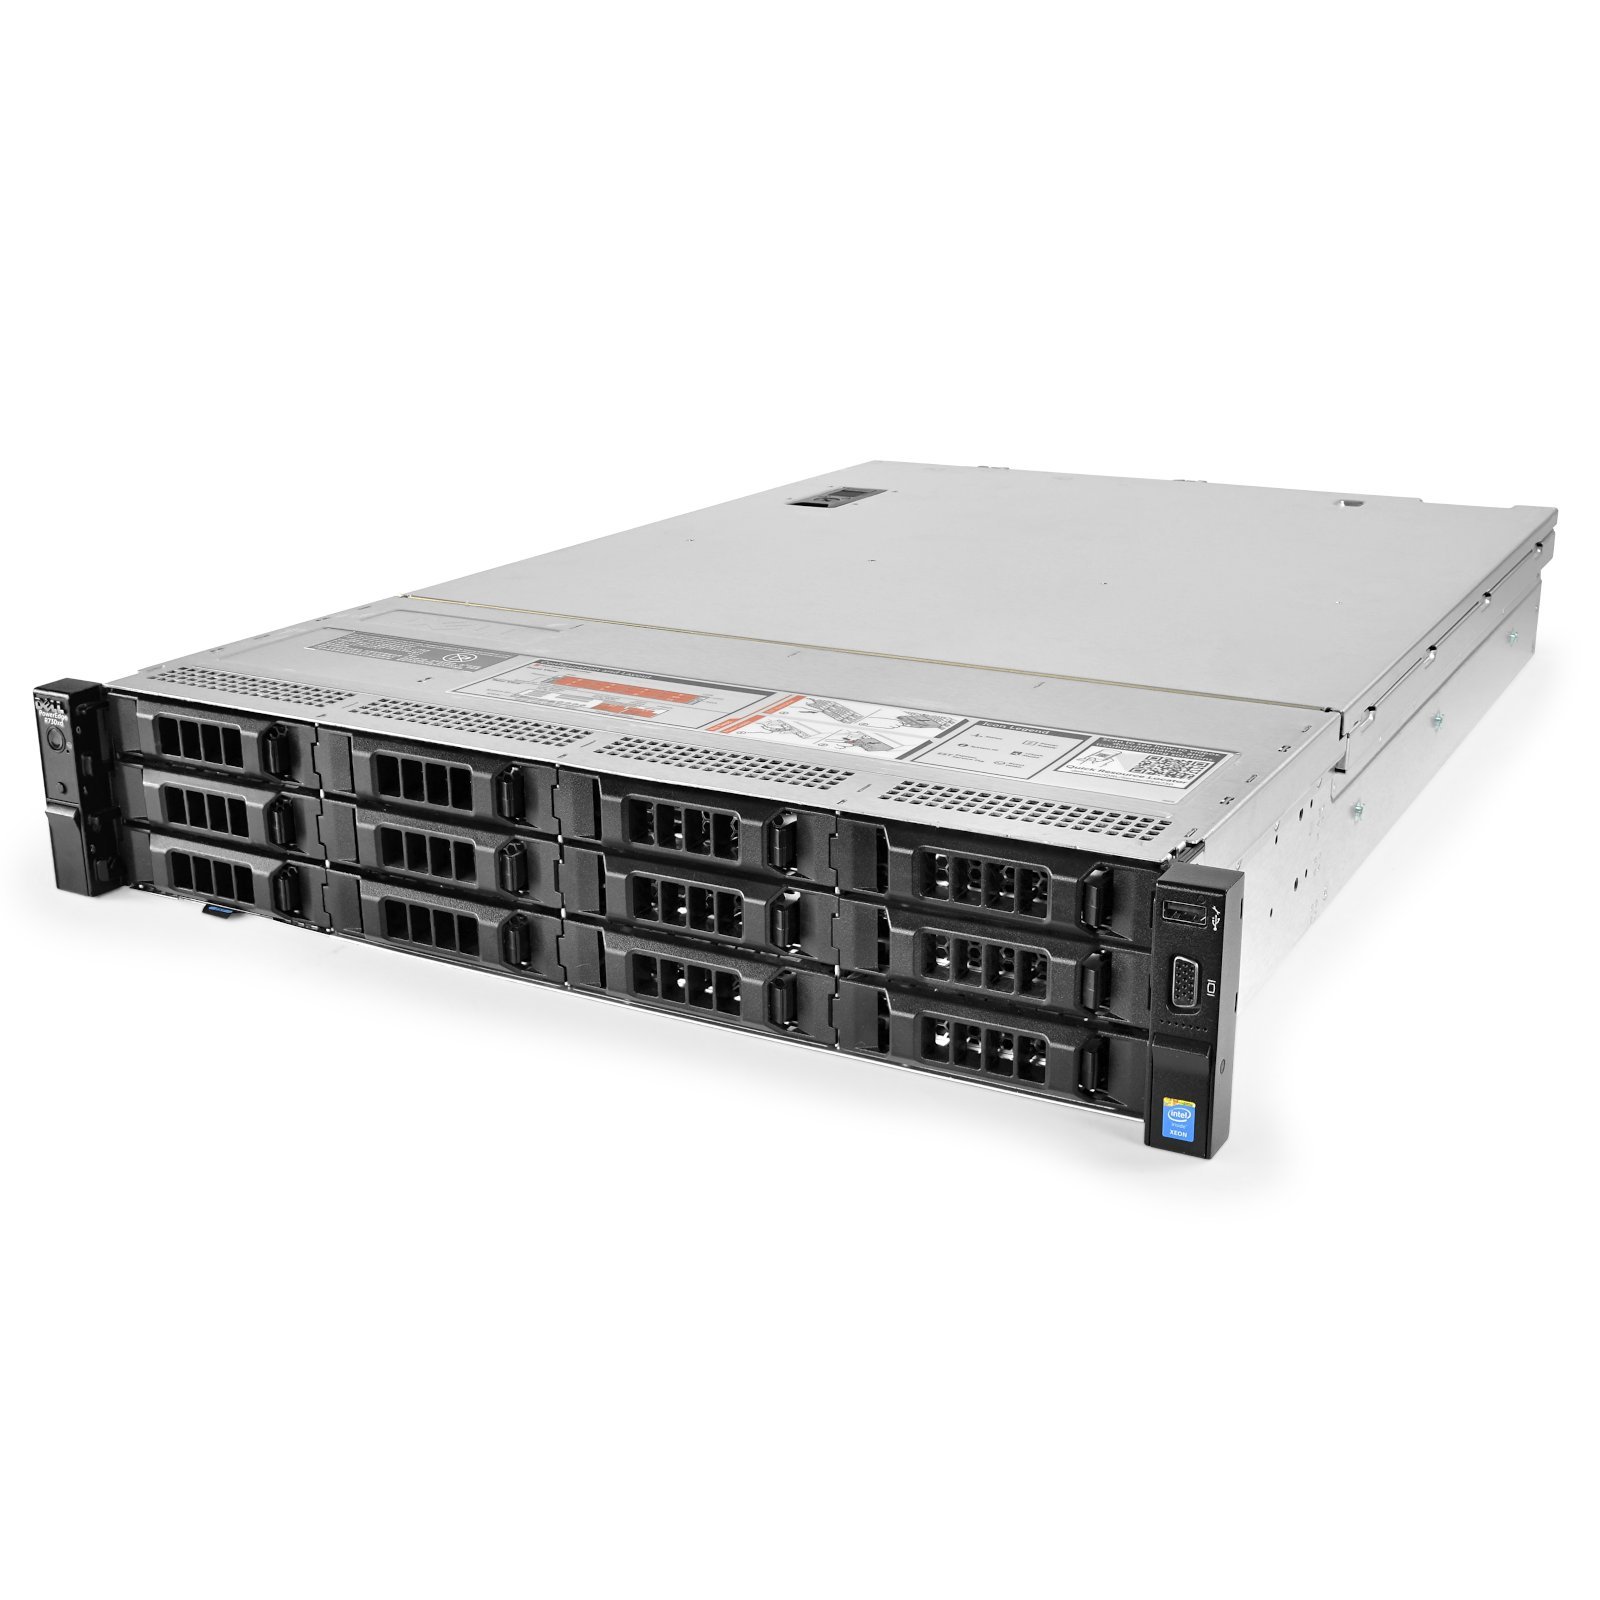 Подробное фото Сервер DELL PowerEdge R730XD 2x Xeon E5-2620v3 64Gb 2133P DDR4 12x noHDD 3.5" SAS RAID Perc H730 mini, 1024Mb, 2*PSU 750W